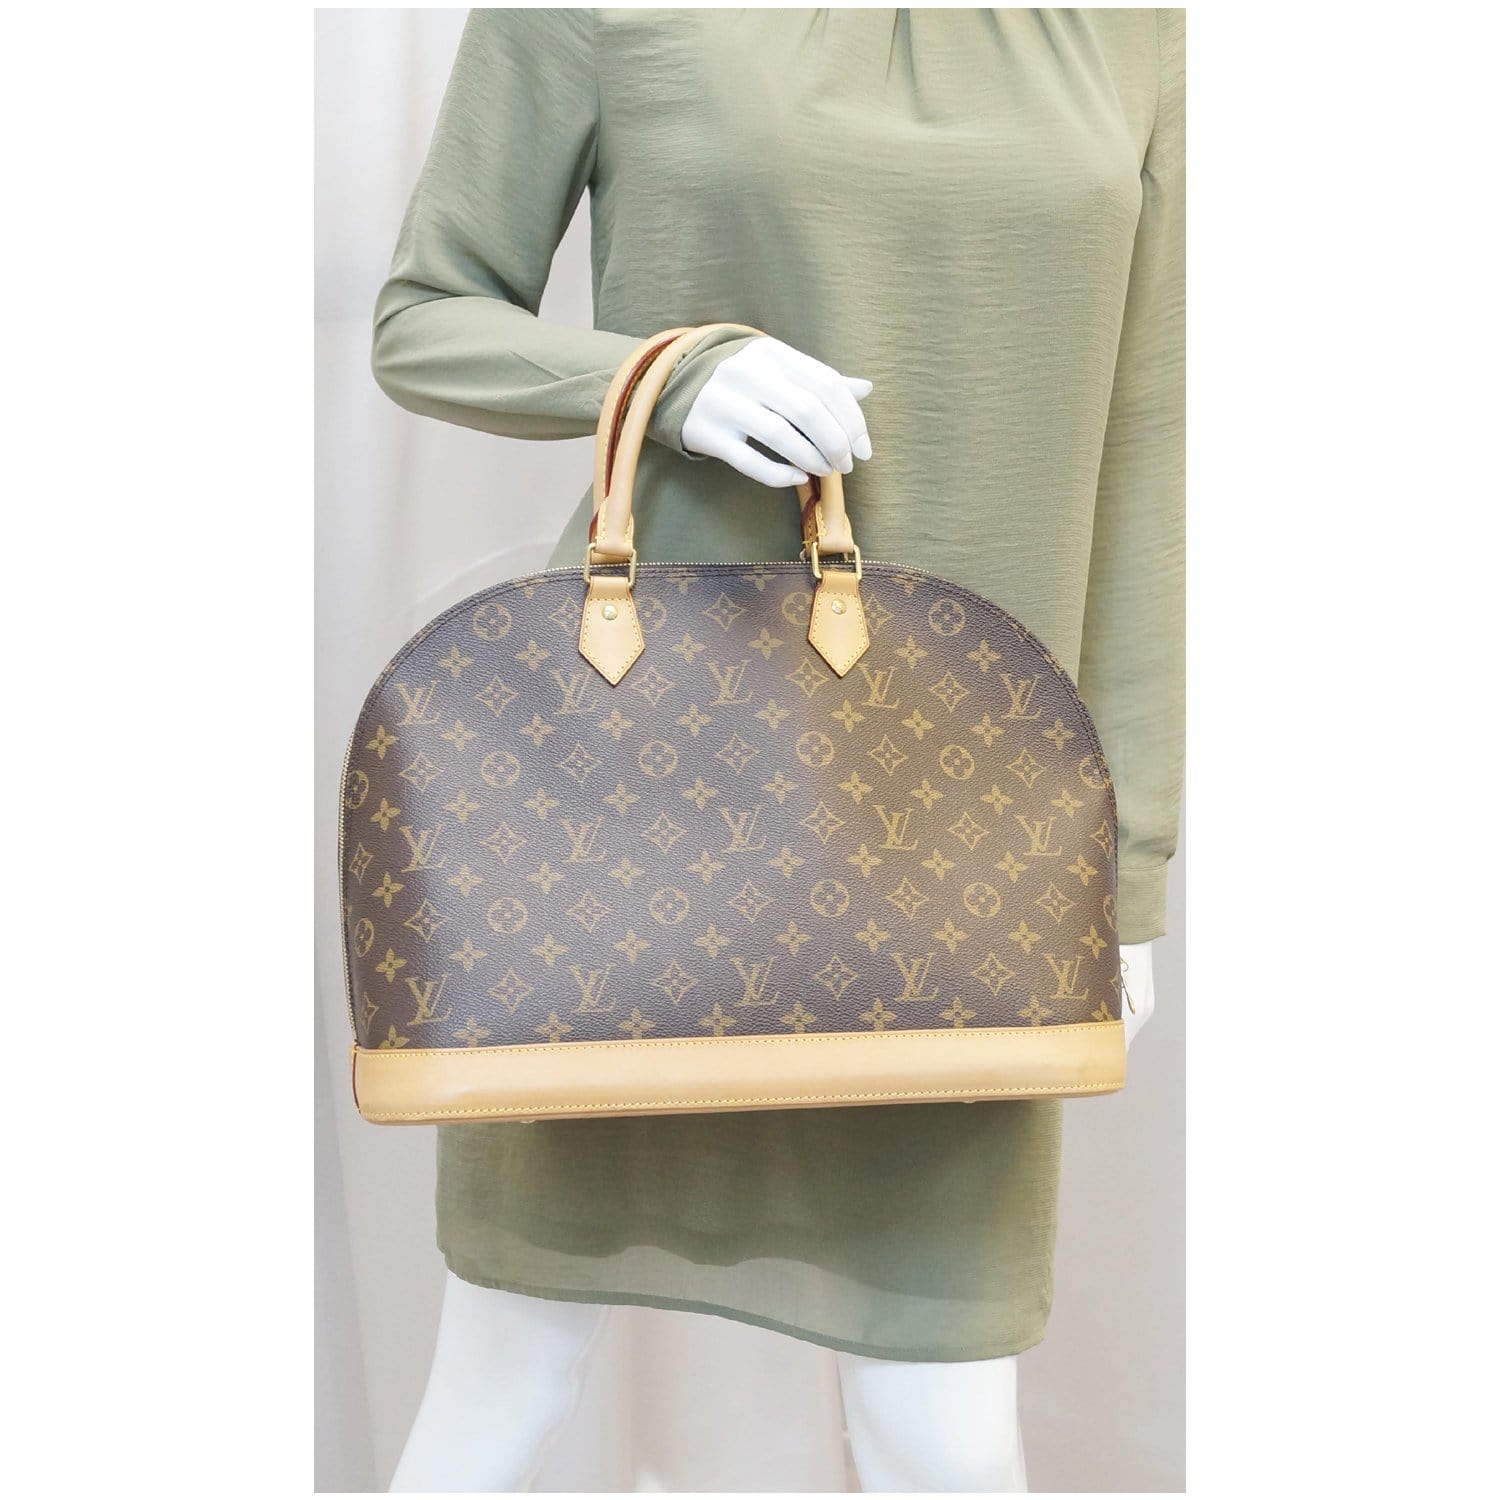 BRAGMYBAG - The Louis Vuitton Alma Bag 😍 - Image @agnesesworld #chanel  #chanelbag